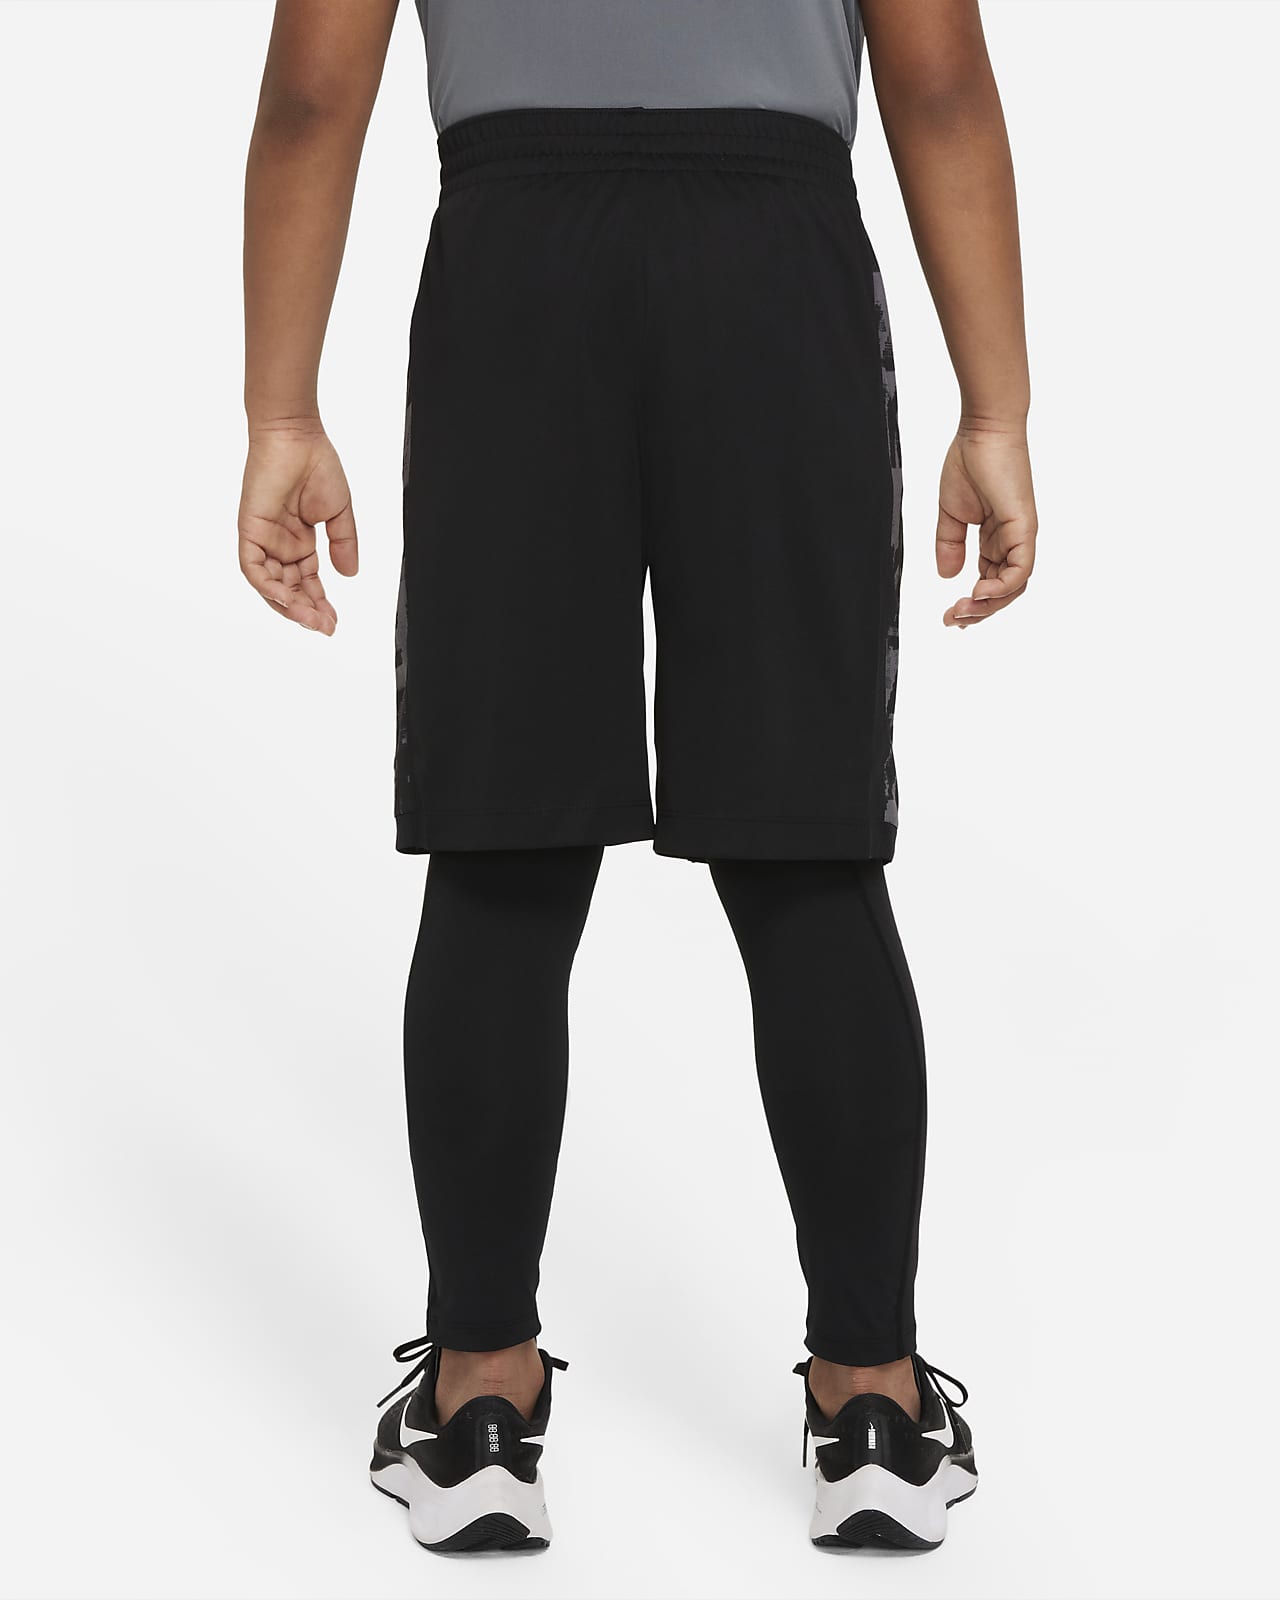 NIKE PRO Dri-Fit Spandex Lycra Leggings Shorts - S